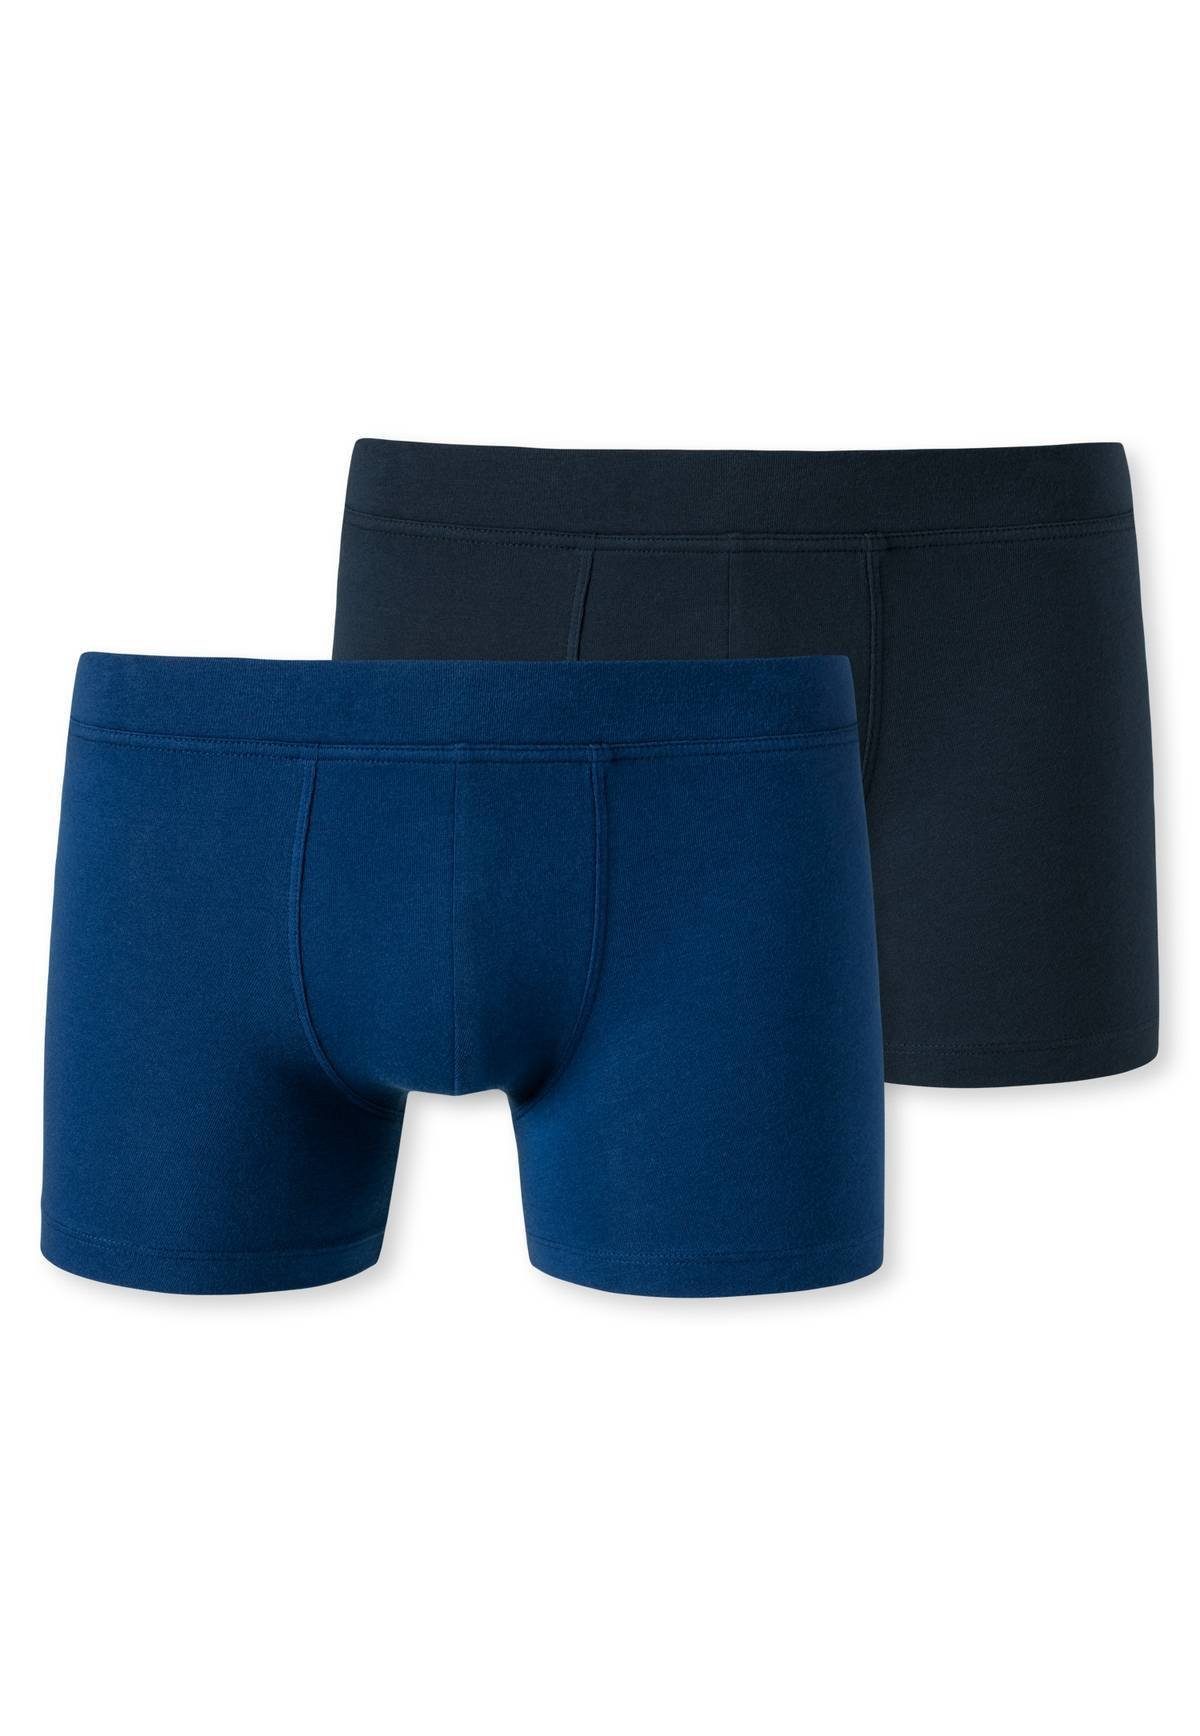 Schiesser Boxer Jungen Boxershorts, 2er Pack - Unterhose, Pants Blau